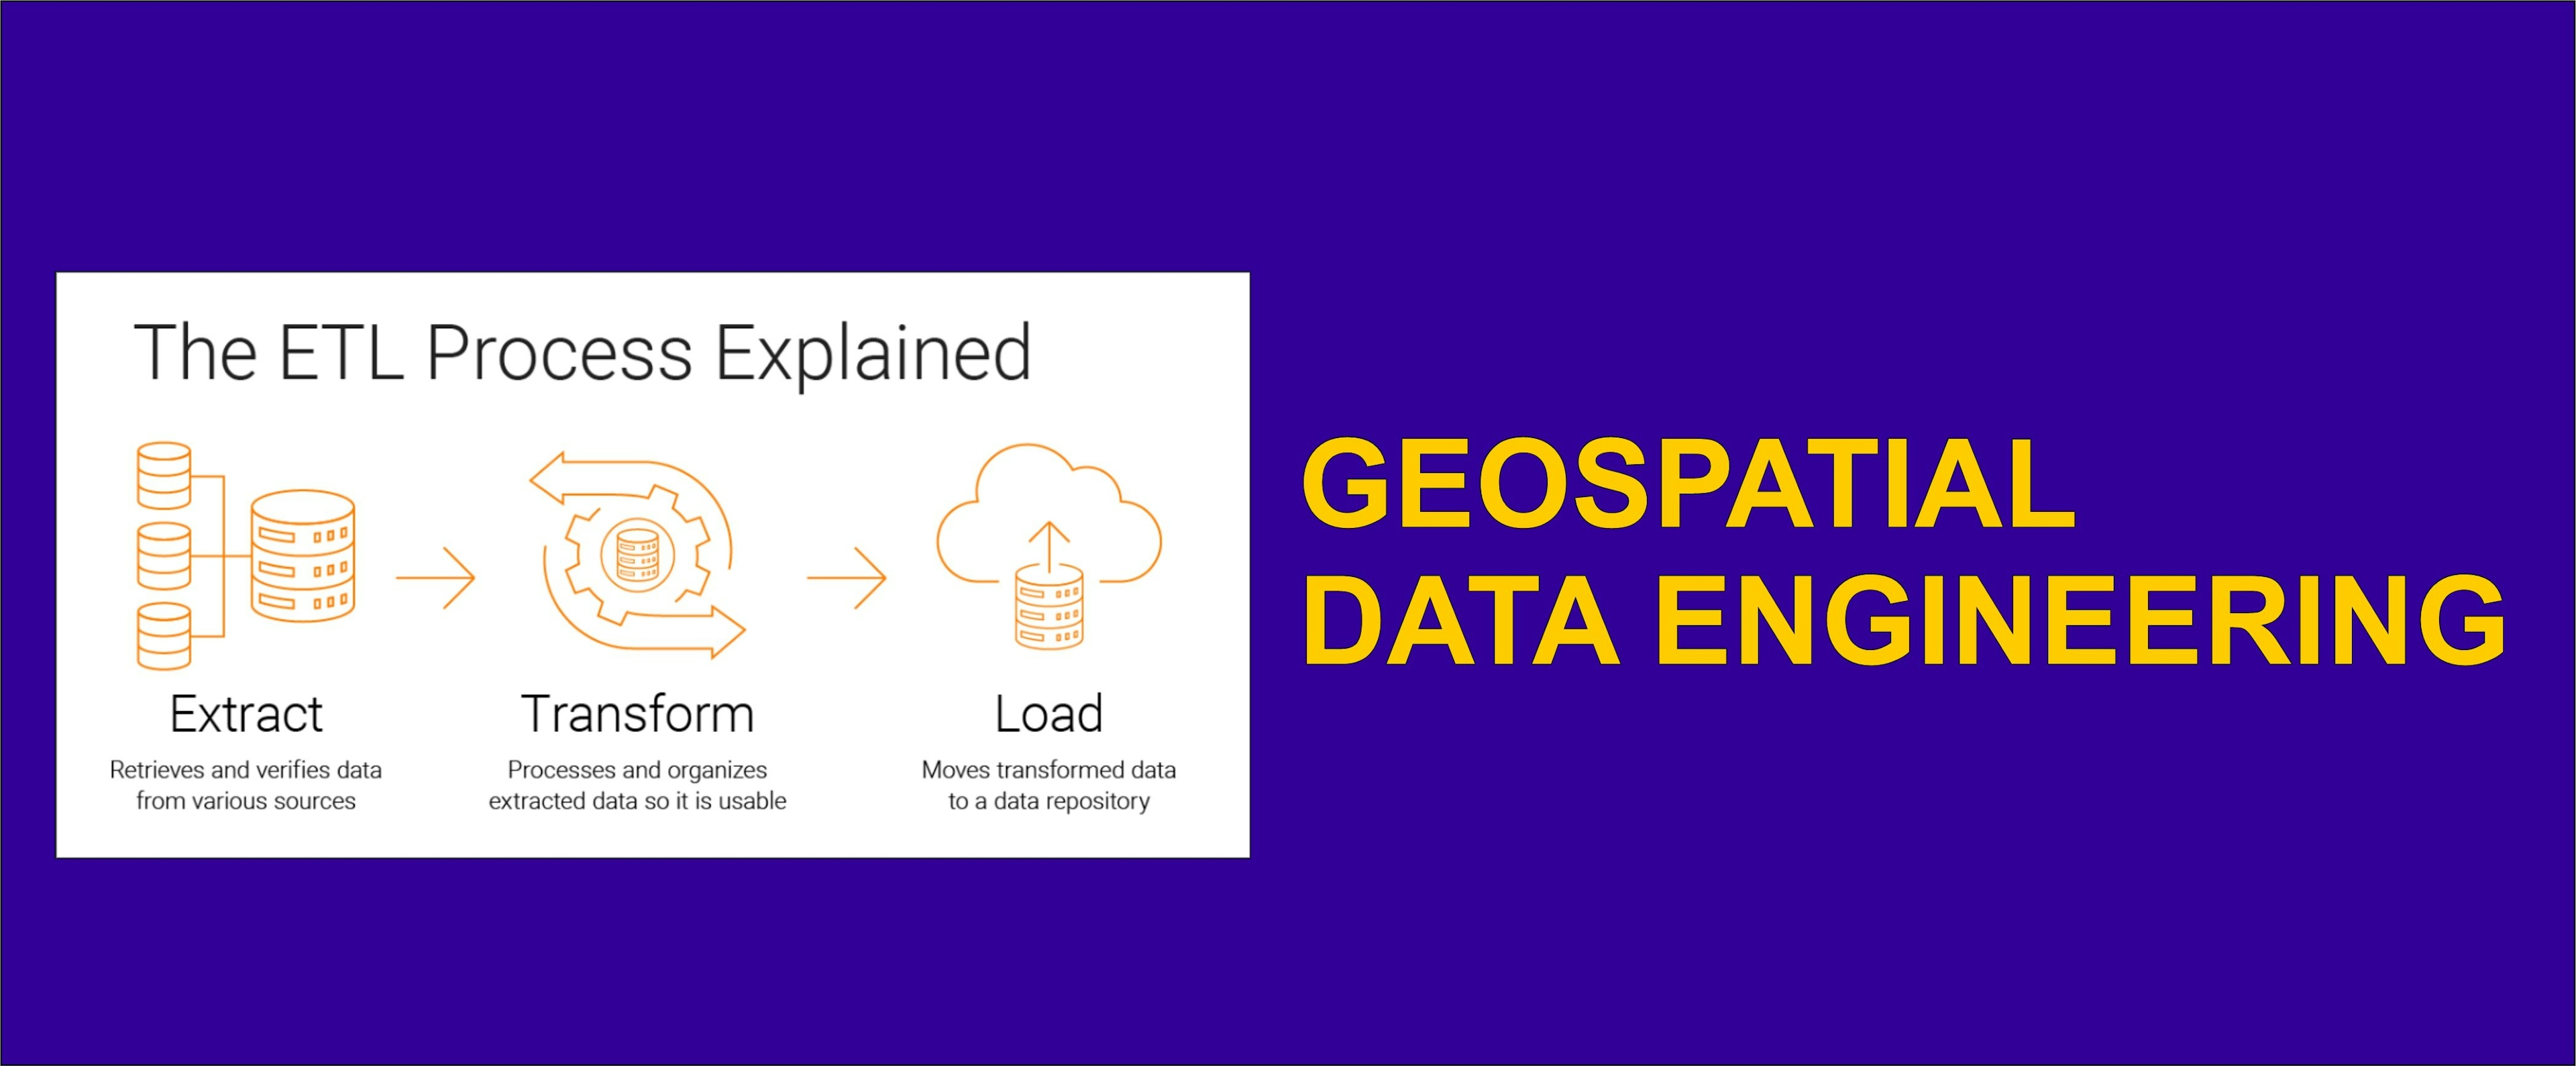 Geospatial data engineering 